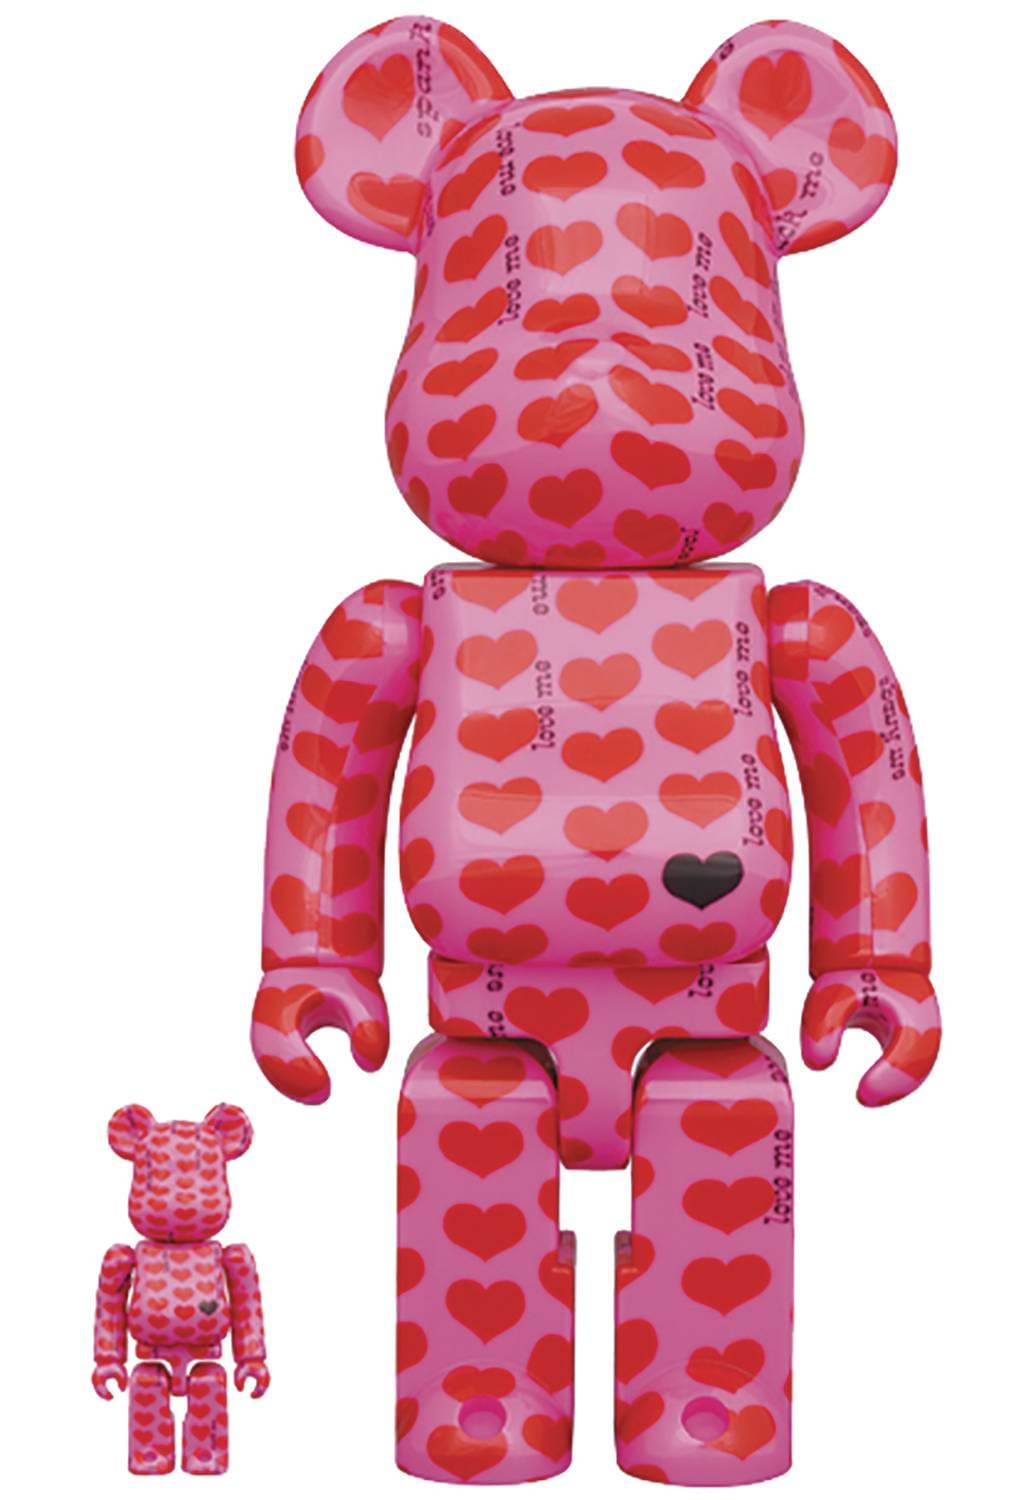 Medicom: BEar Brick - Pink Heart 100% & 400% (Headwax Organization) - Third Eye